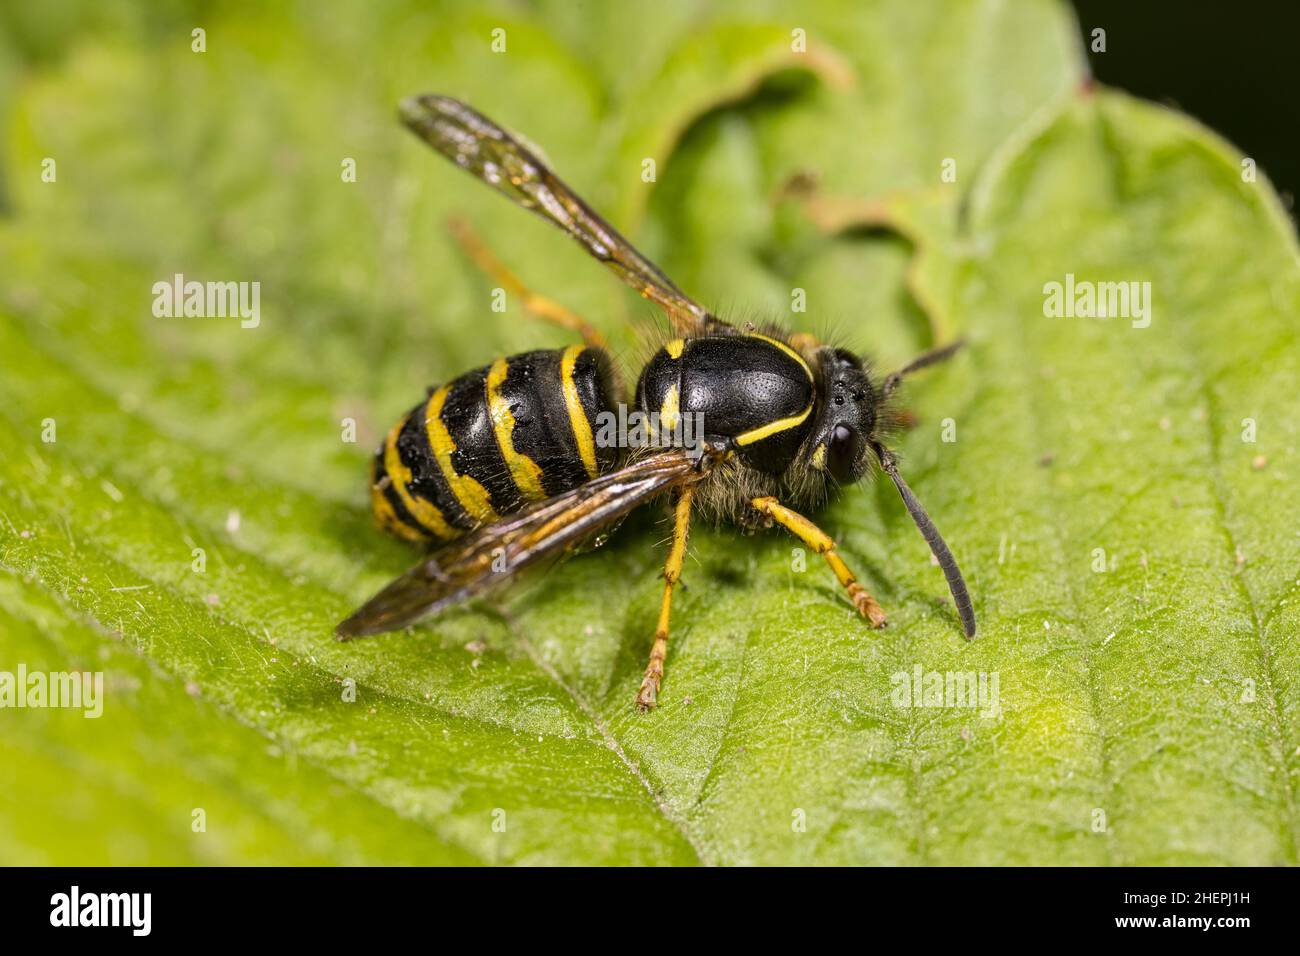 Saxon wasp (Dolichovespula saxonica, Vespula saxonica), sits on a leaf, Germany Stock Photo